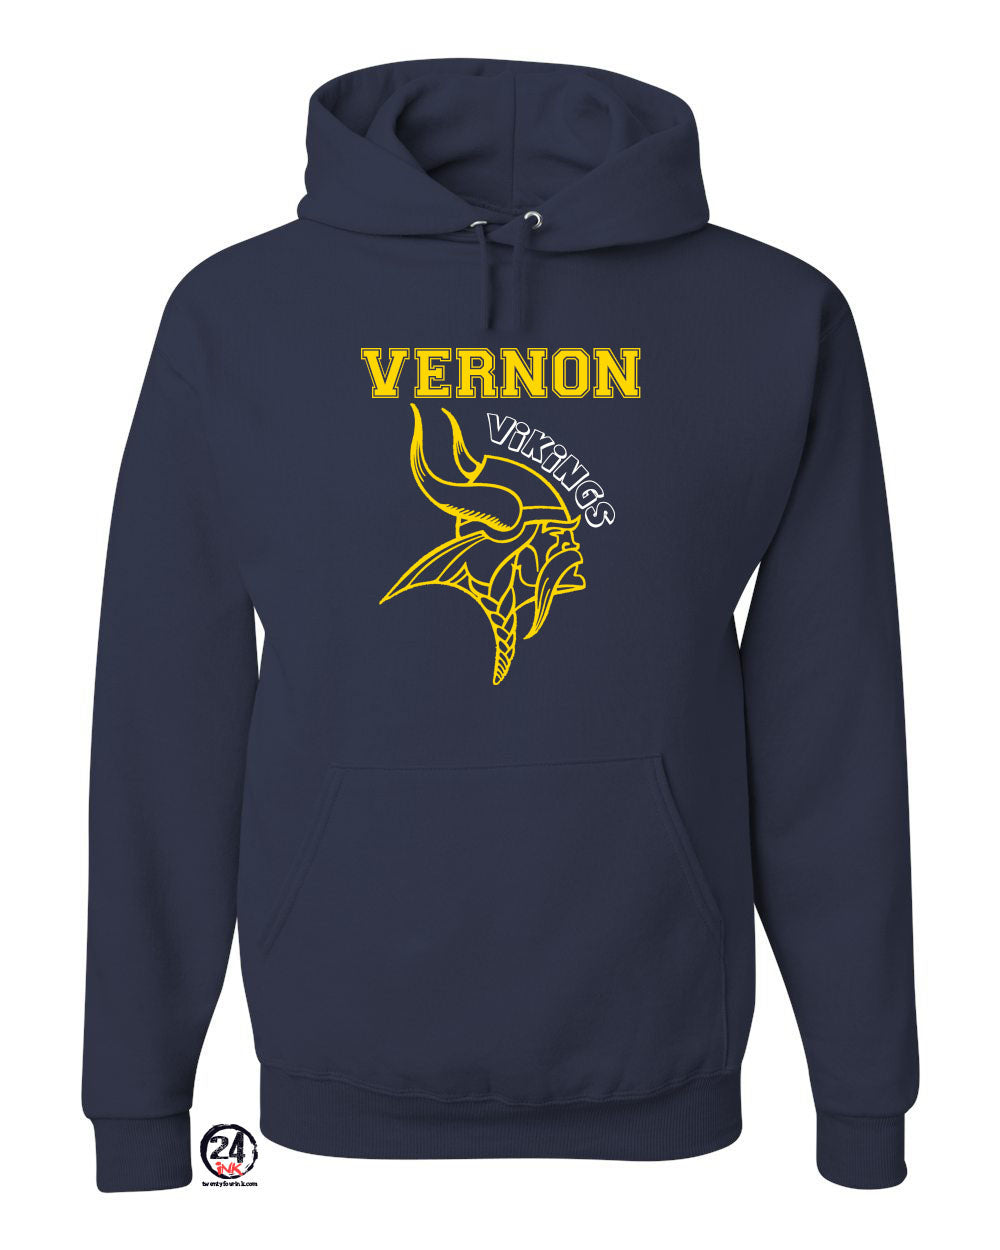 Vernon design 6 Hooded Sweatshirt